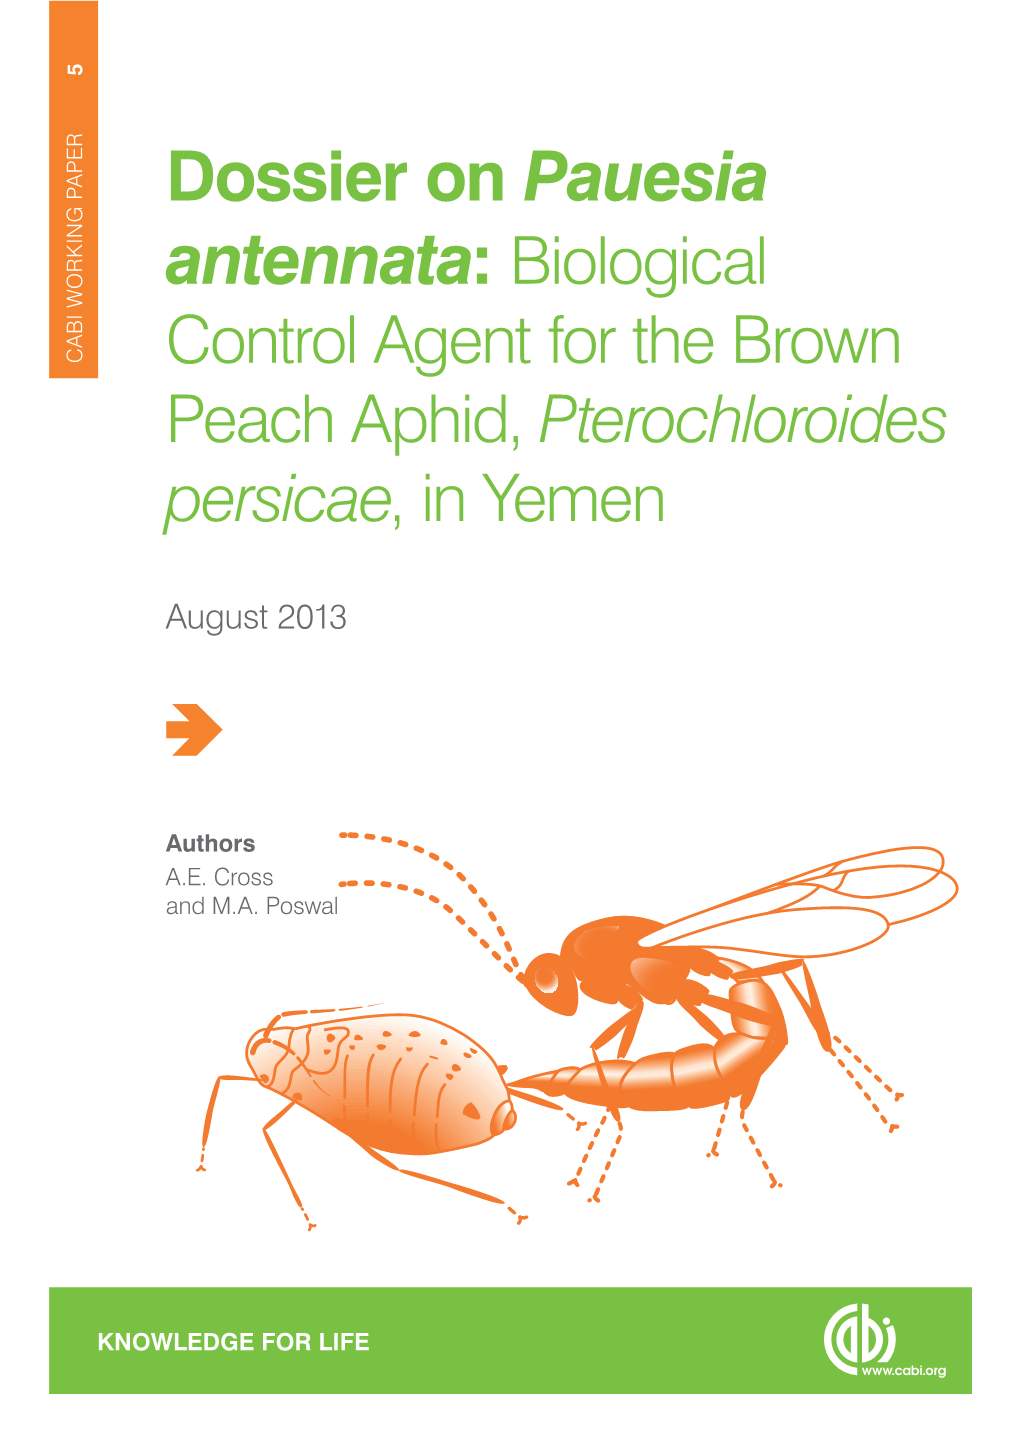 Dossier on Pauesia Antennata: Biological